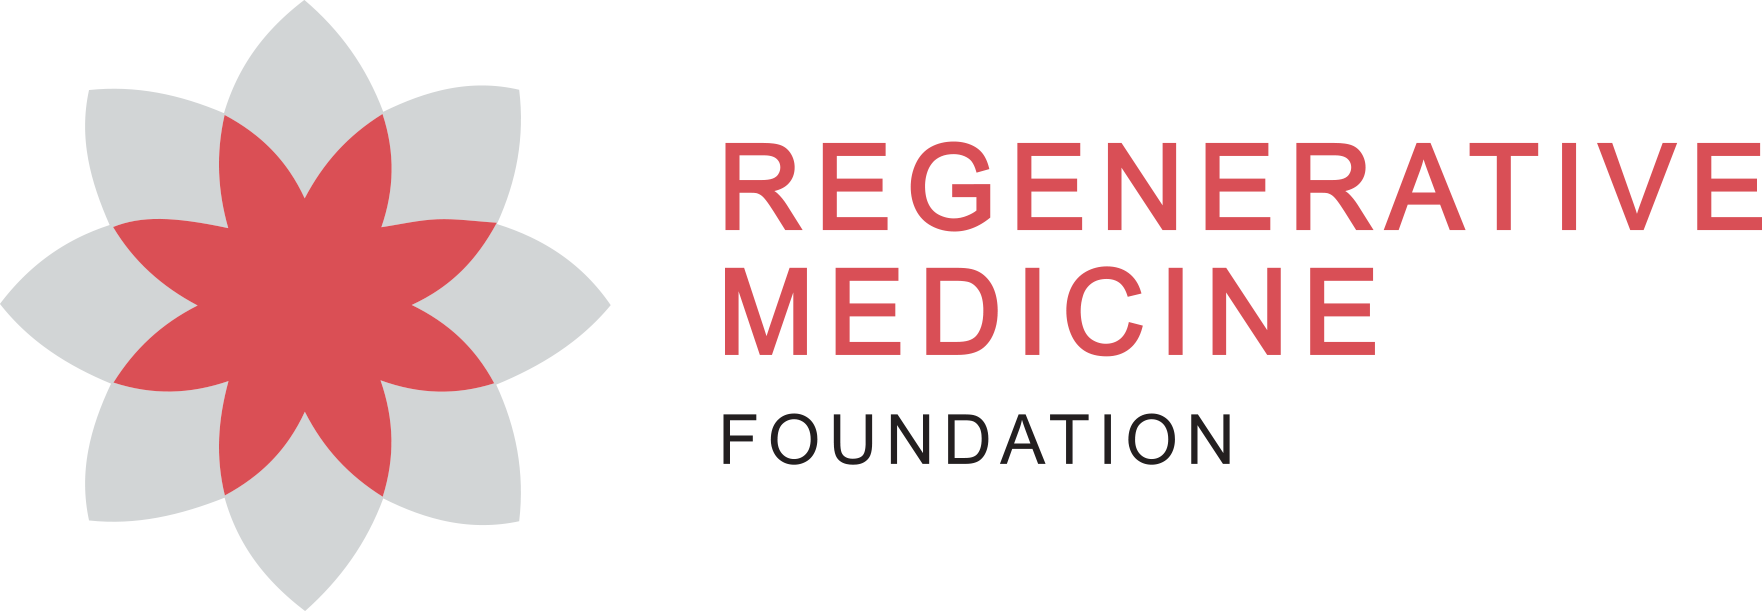 Regnerative Medicine Foundation logo